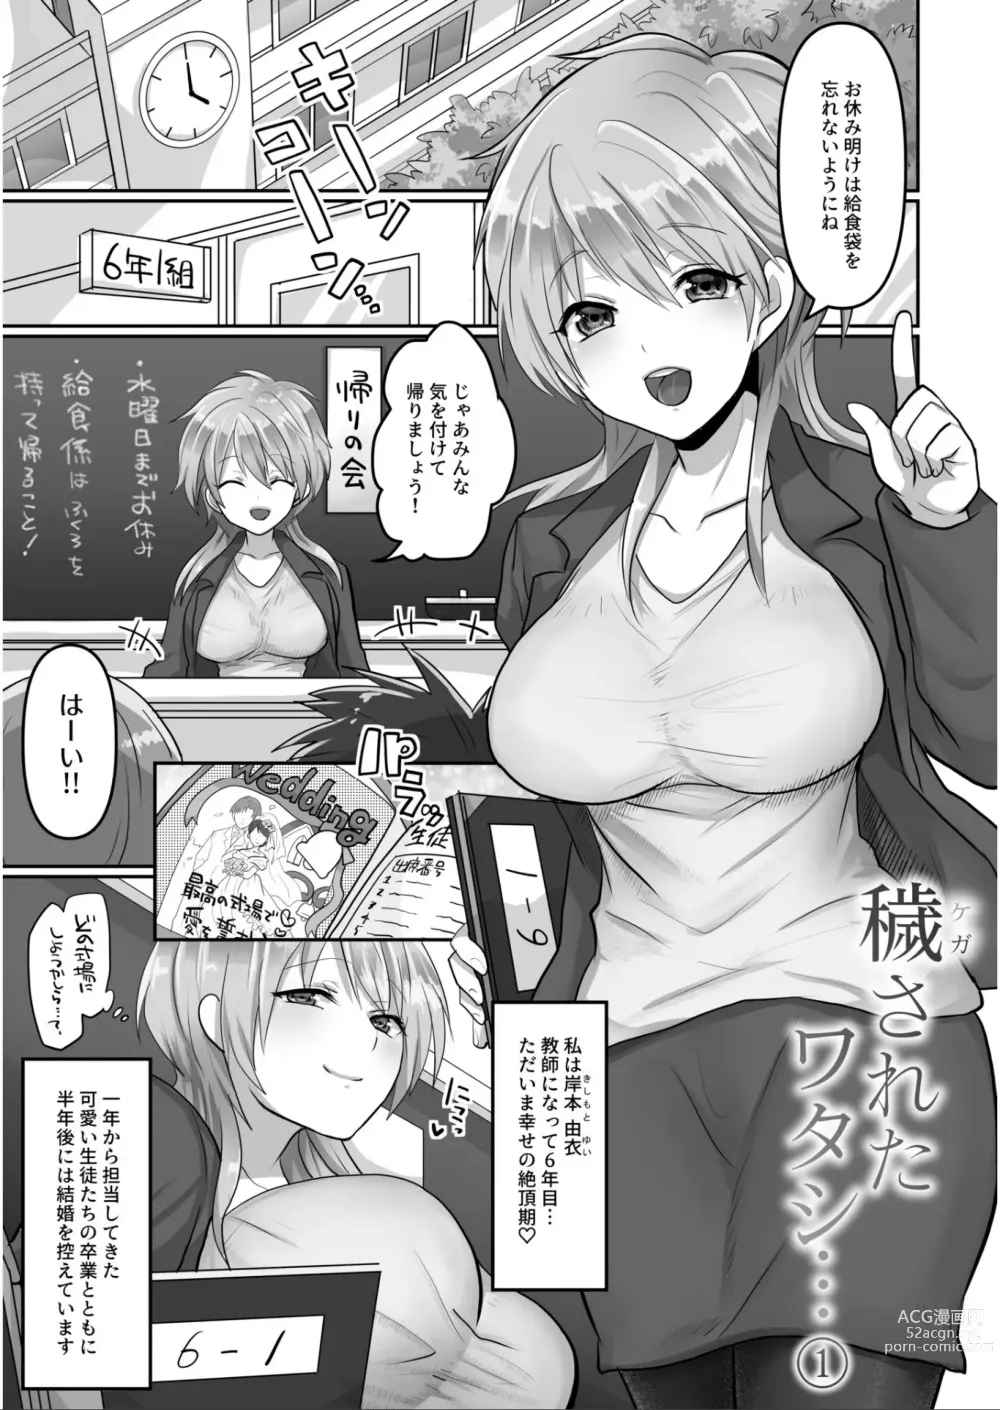 Page 2 of manga Kegasareta Watashi...